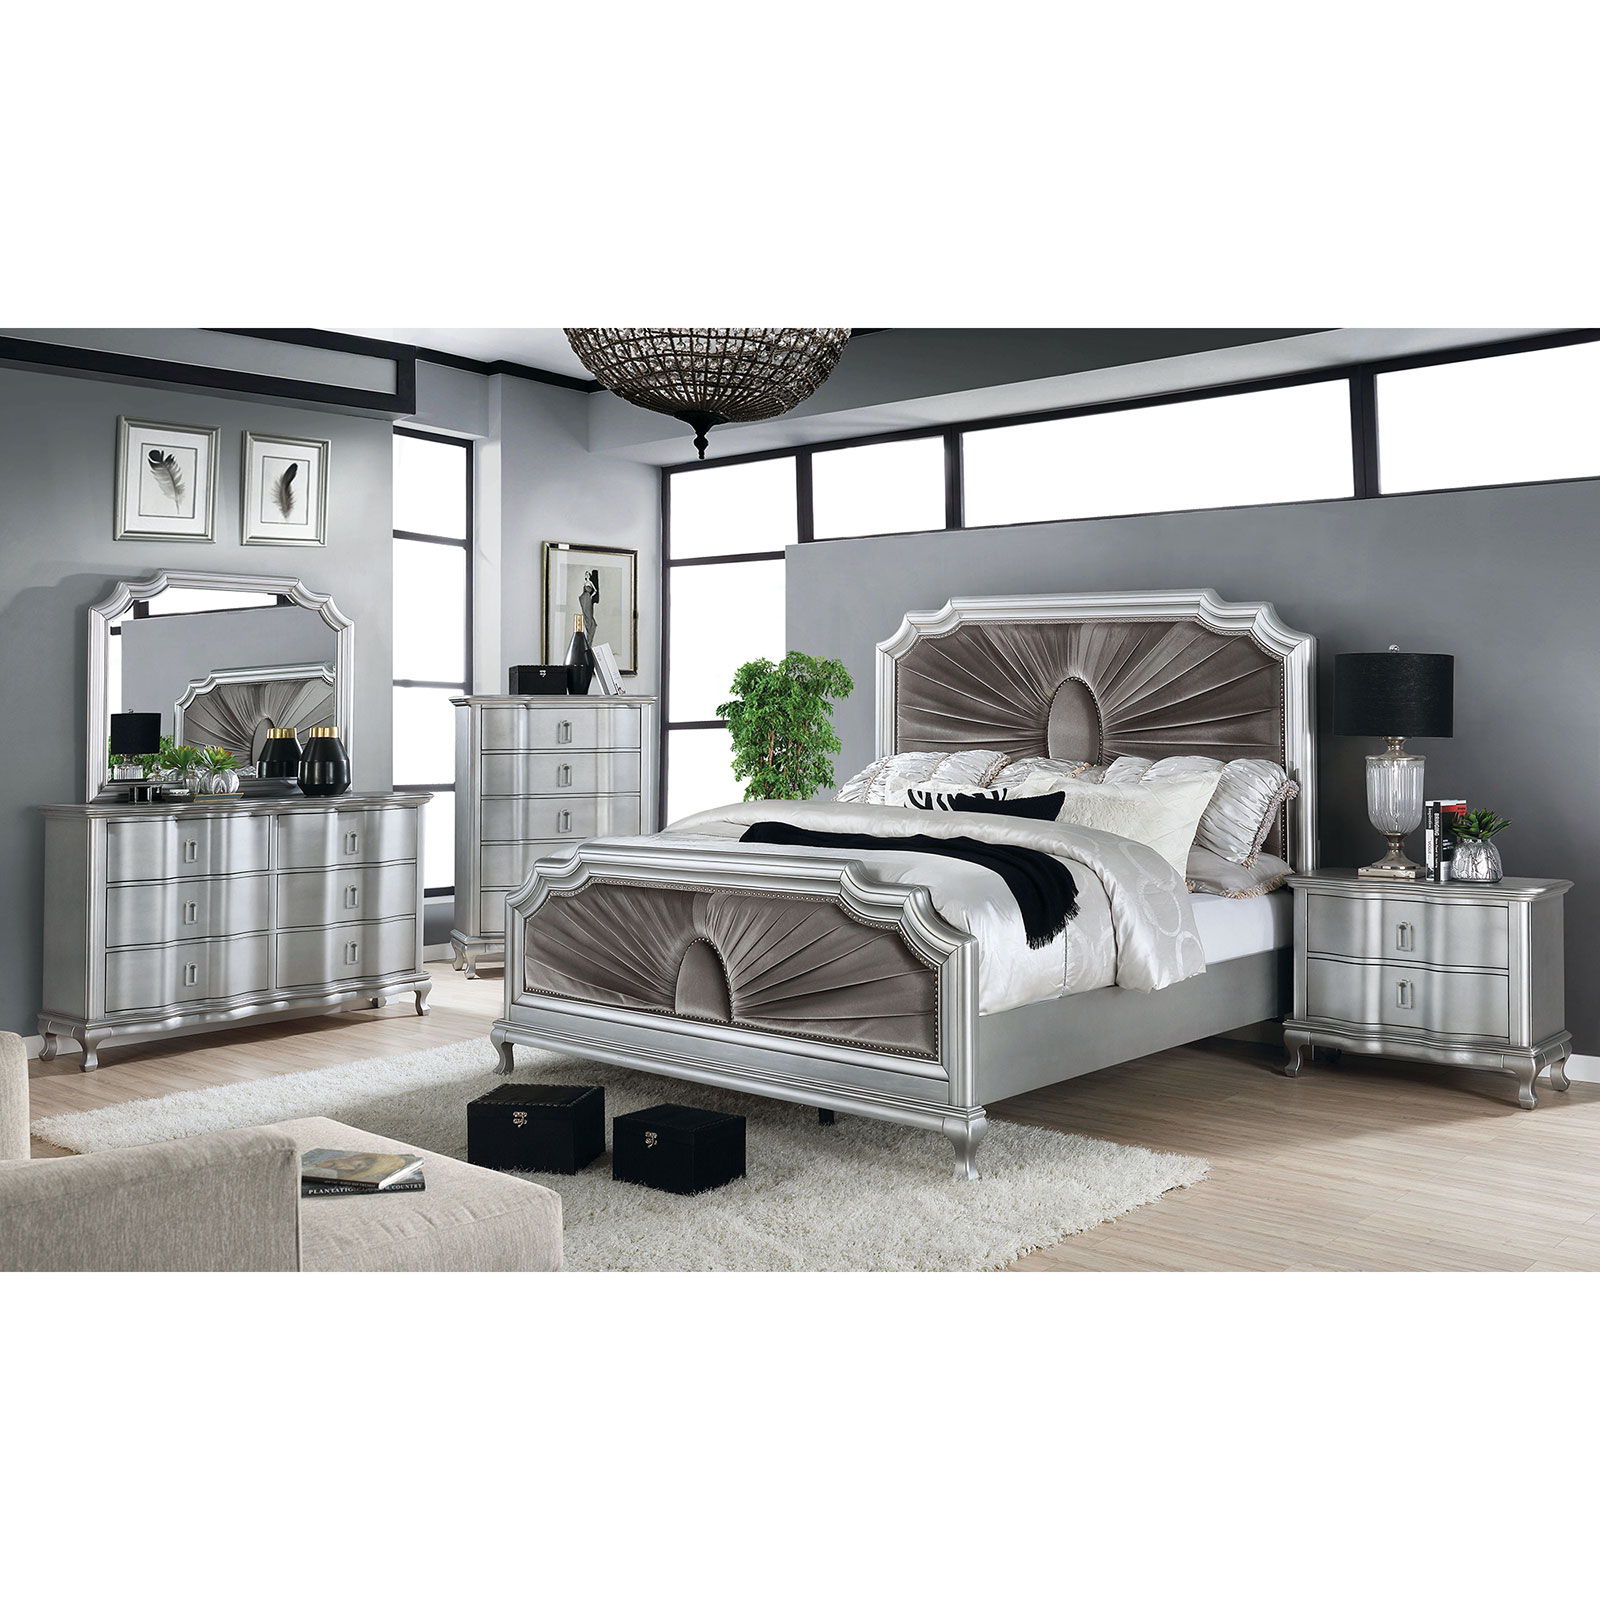 Aalok - 5 Piece Queen Bedroom Set With Chest - Silver / Warm Gray